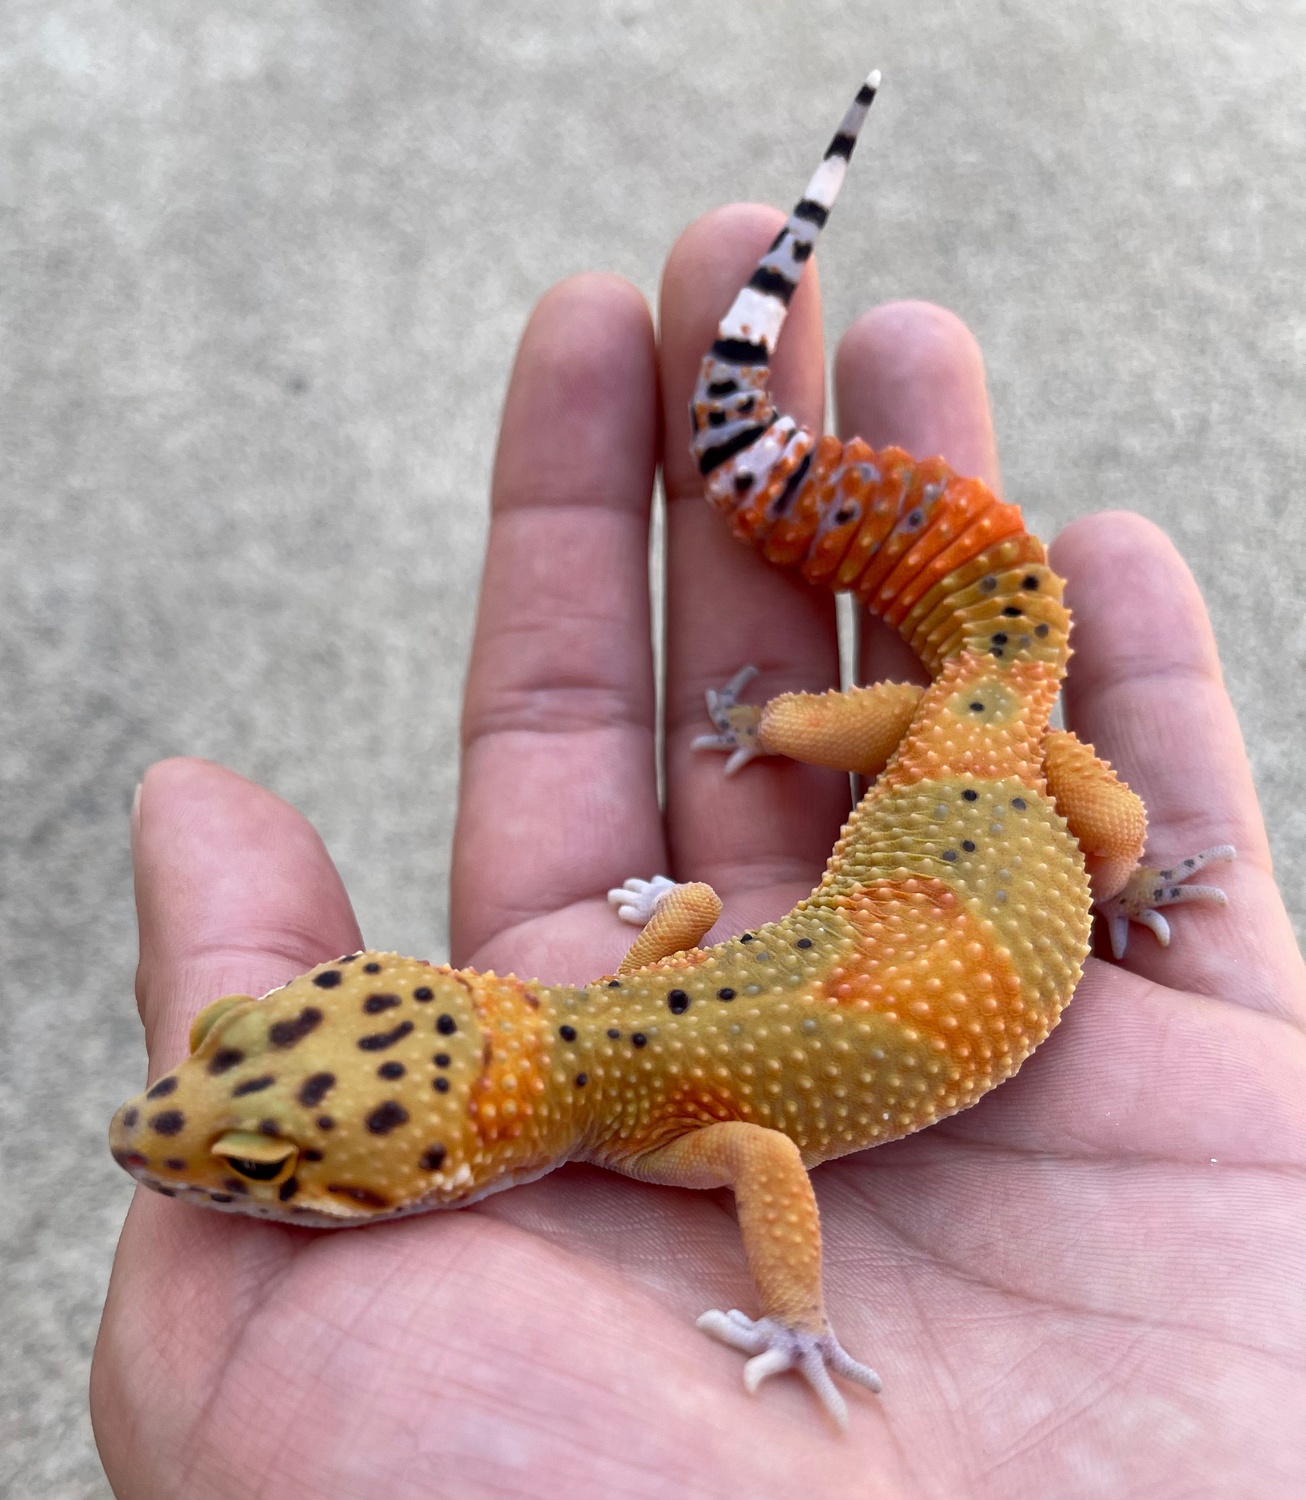 Blood Emerine Leopard Gecko by Bold And Striped Geckos